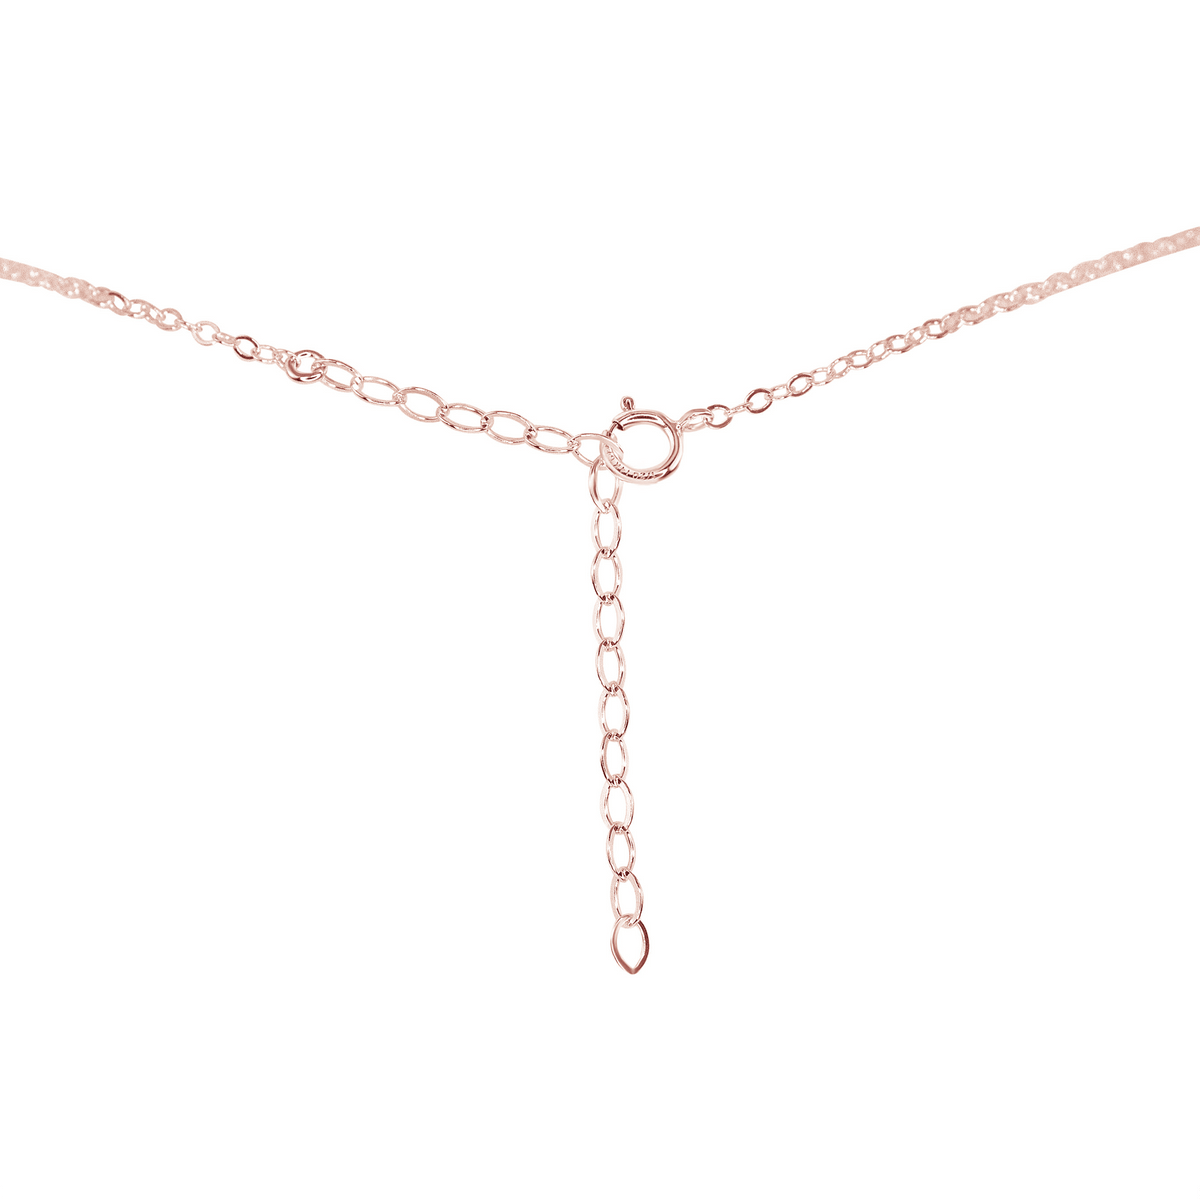 Freshwater Pearl Gemstone Chain Layered Choker Necklace